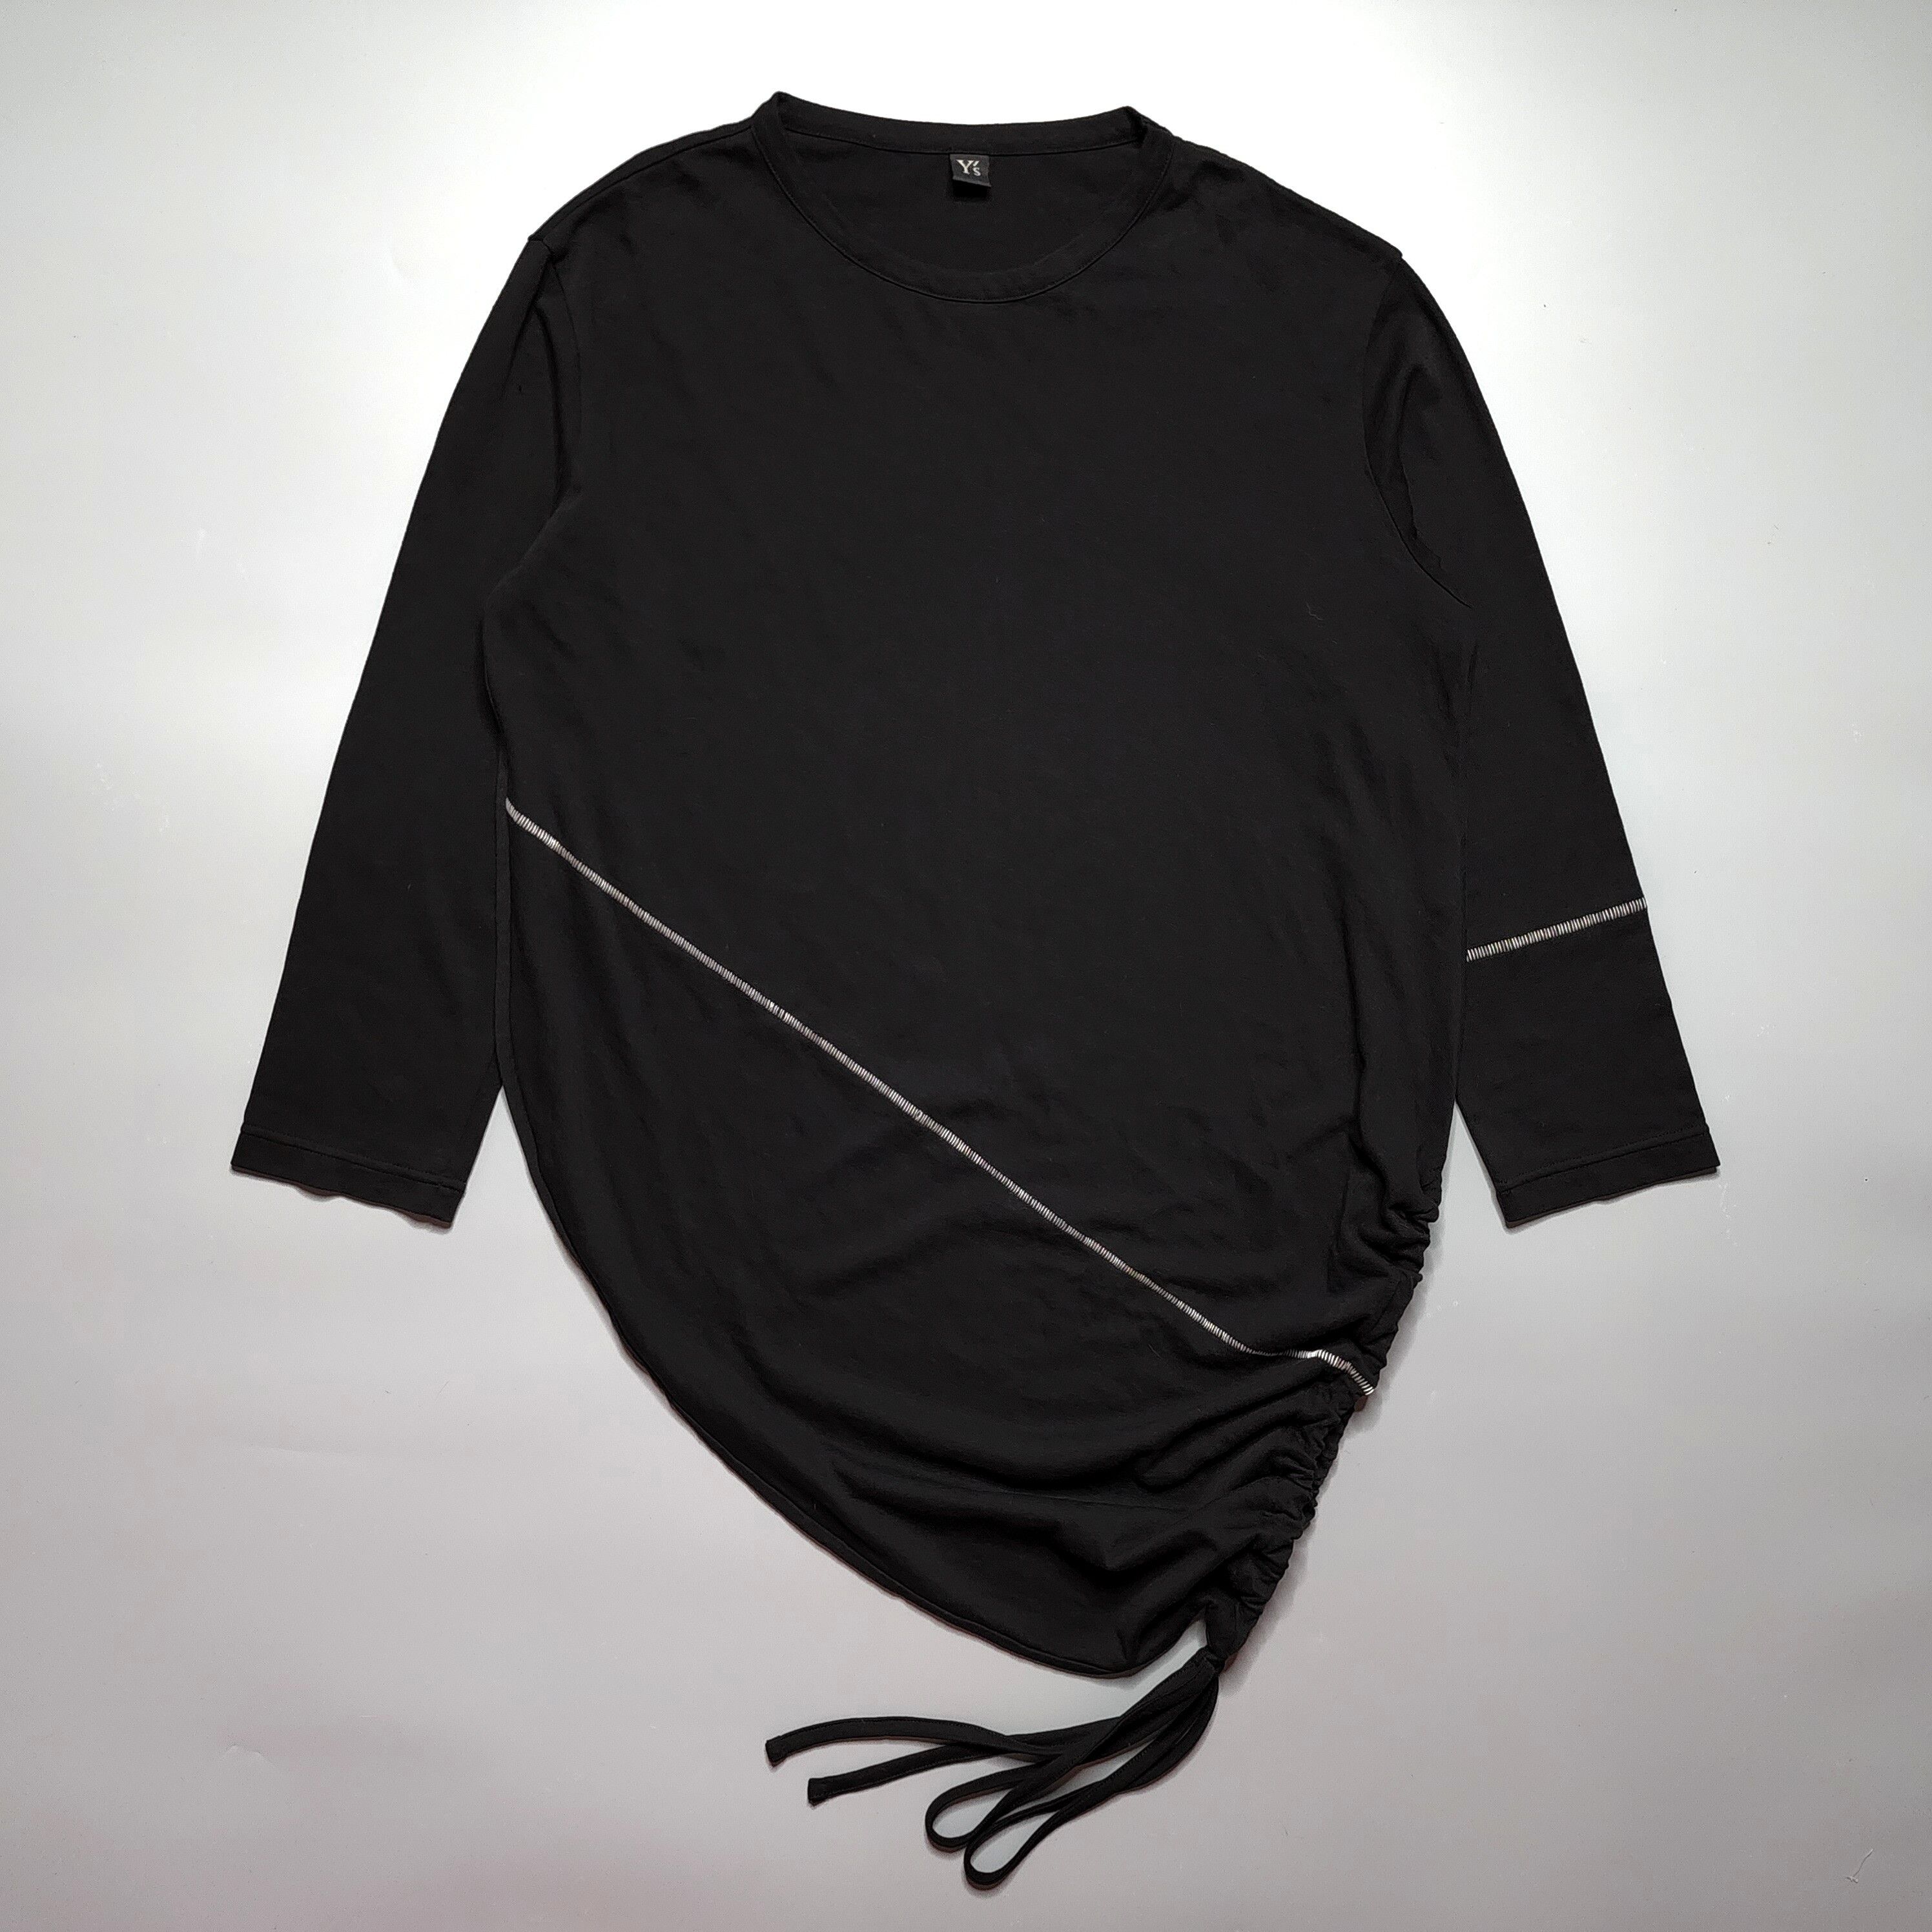 Yohji Yamamoto - Y's Side Drape Embroidery Shirt - 1